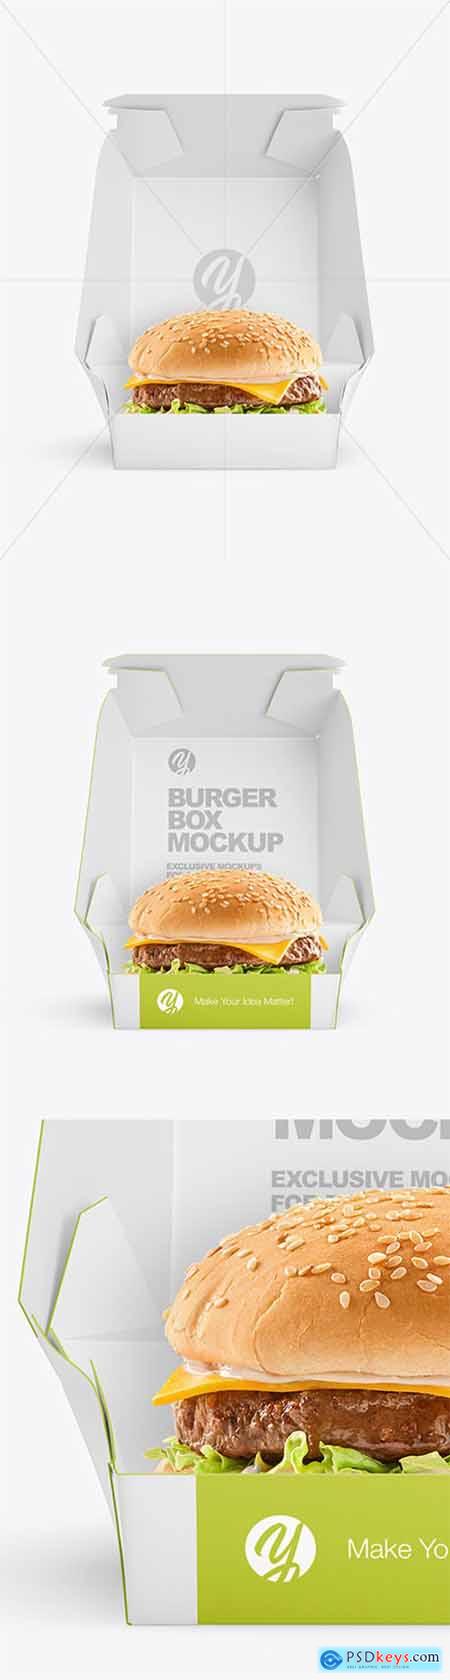 Download Burger In Box Mockup 61279 » Free Download Photoshop Vector Stock image Via Torrent Zippyshare ...